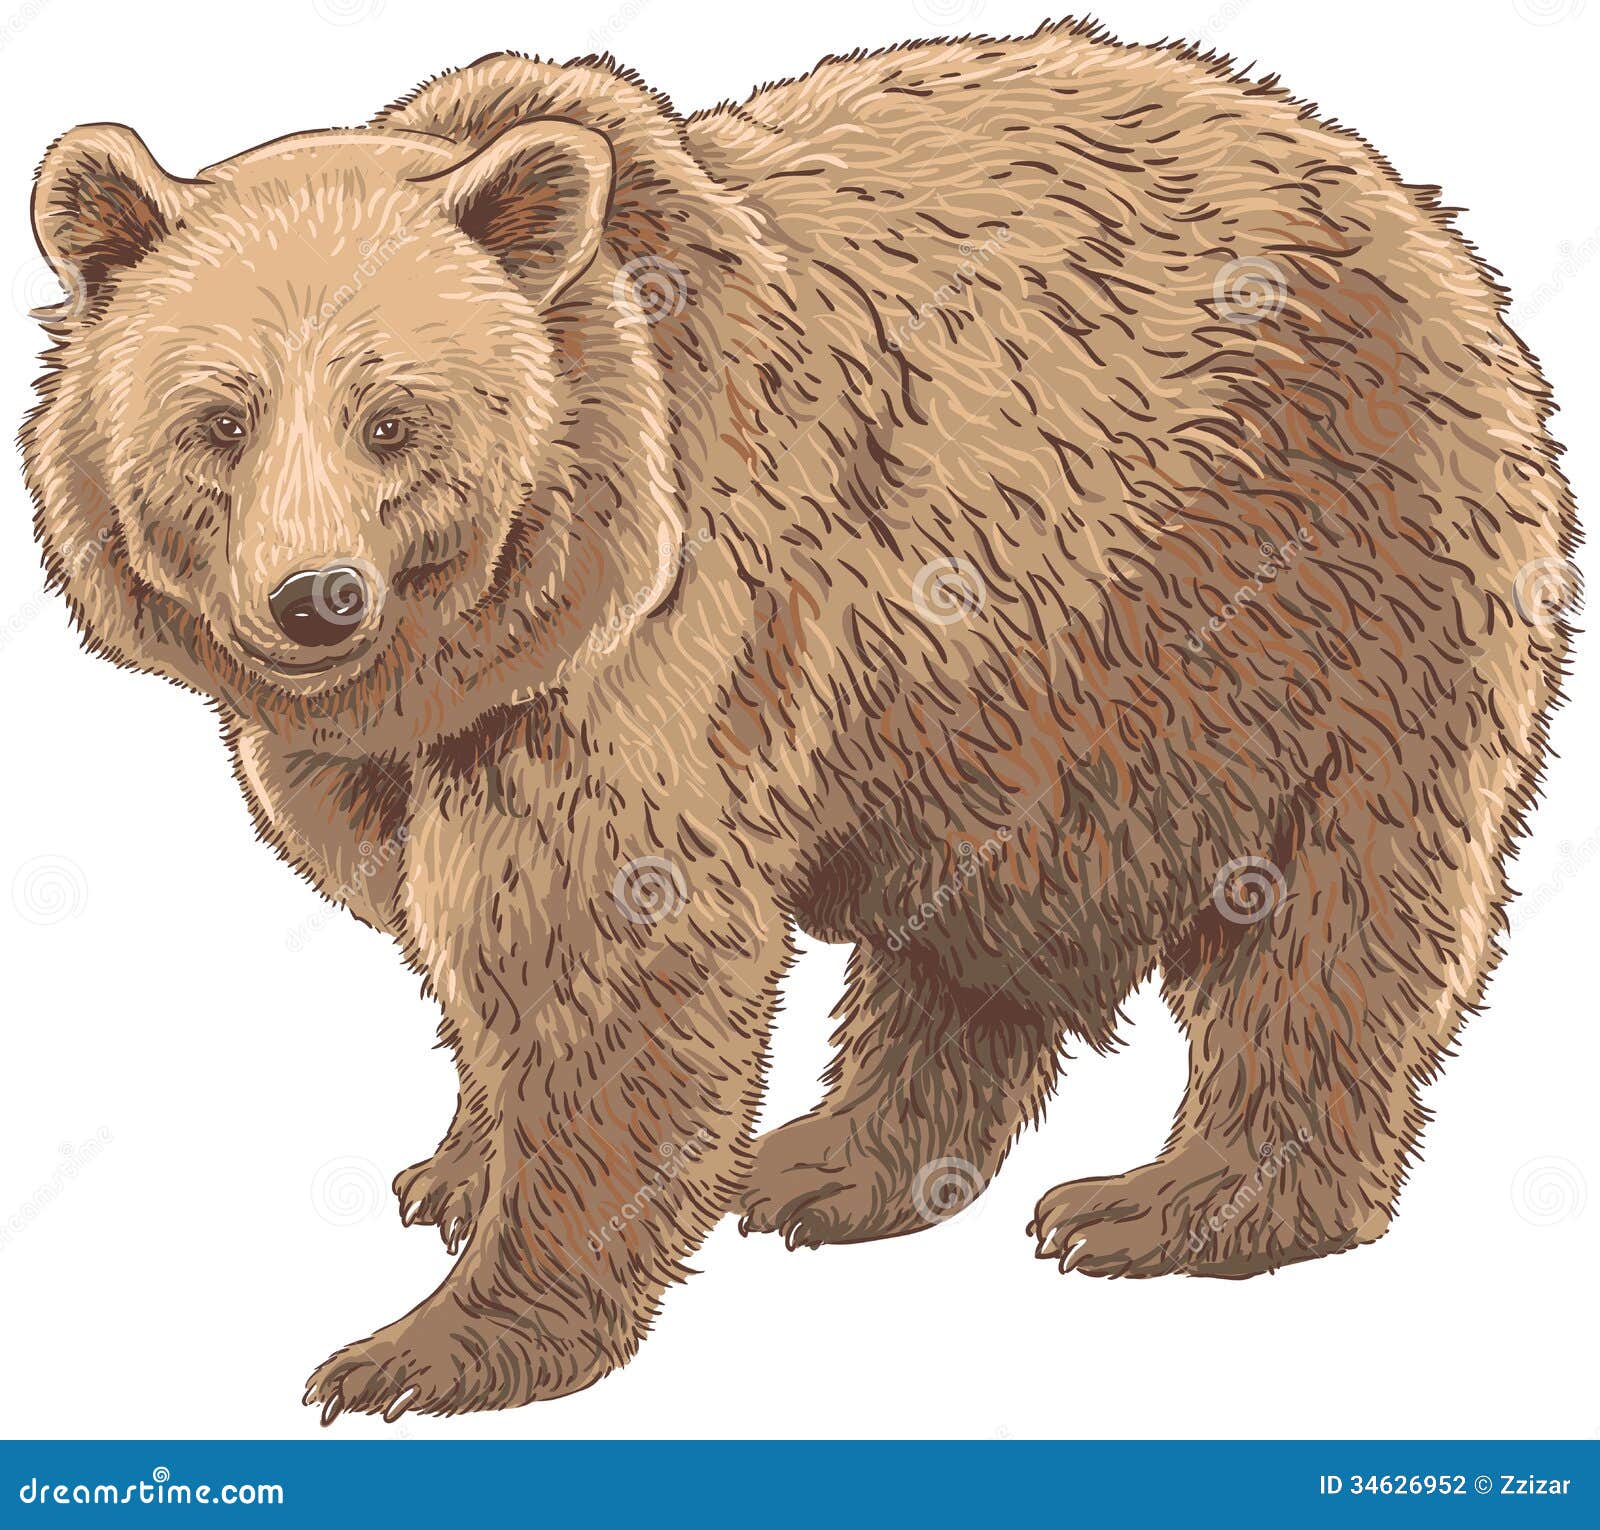 Megsy V Illustration: Bear Research1300 x 1260